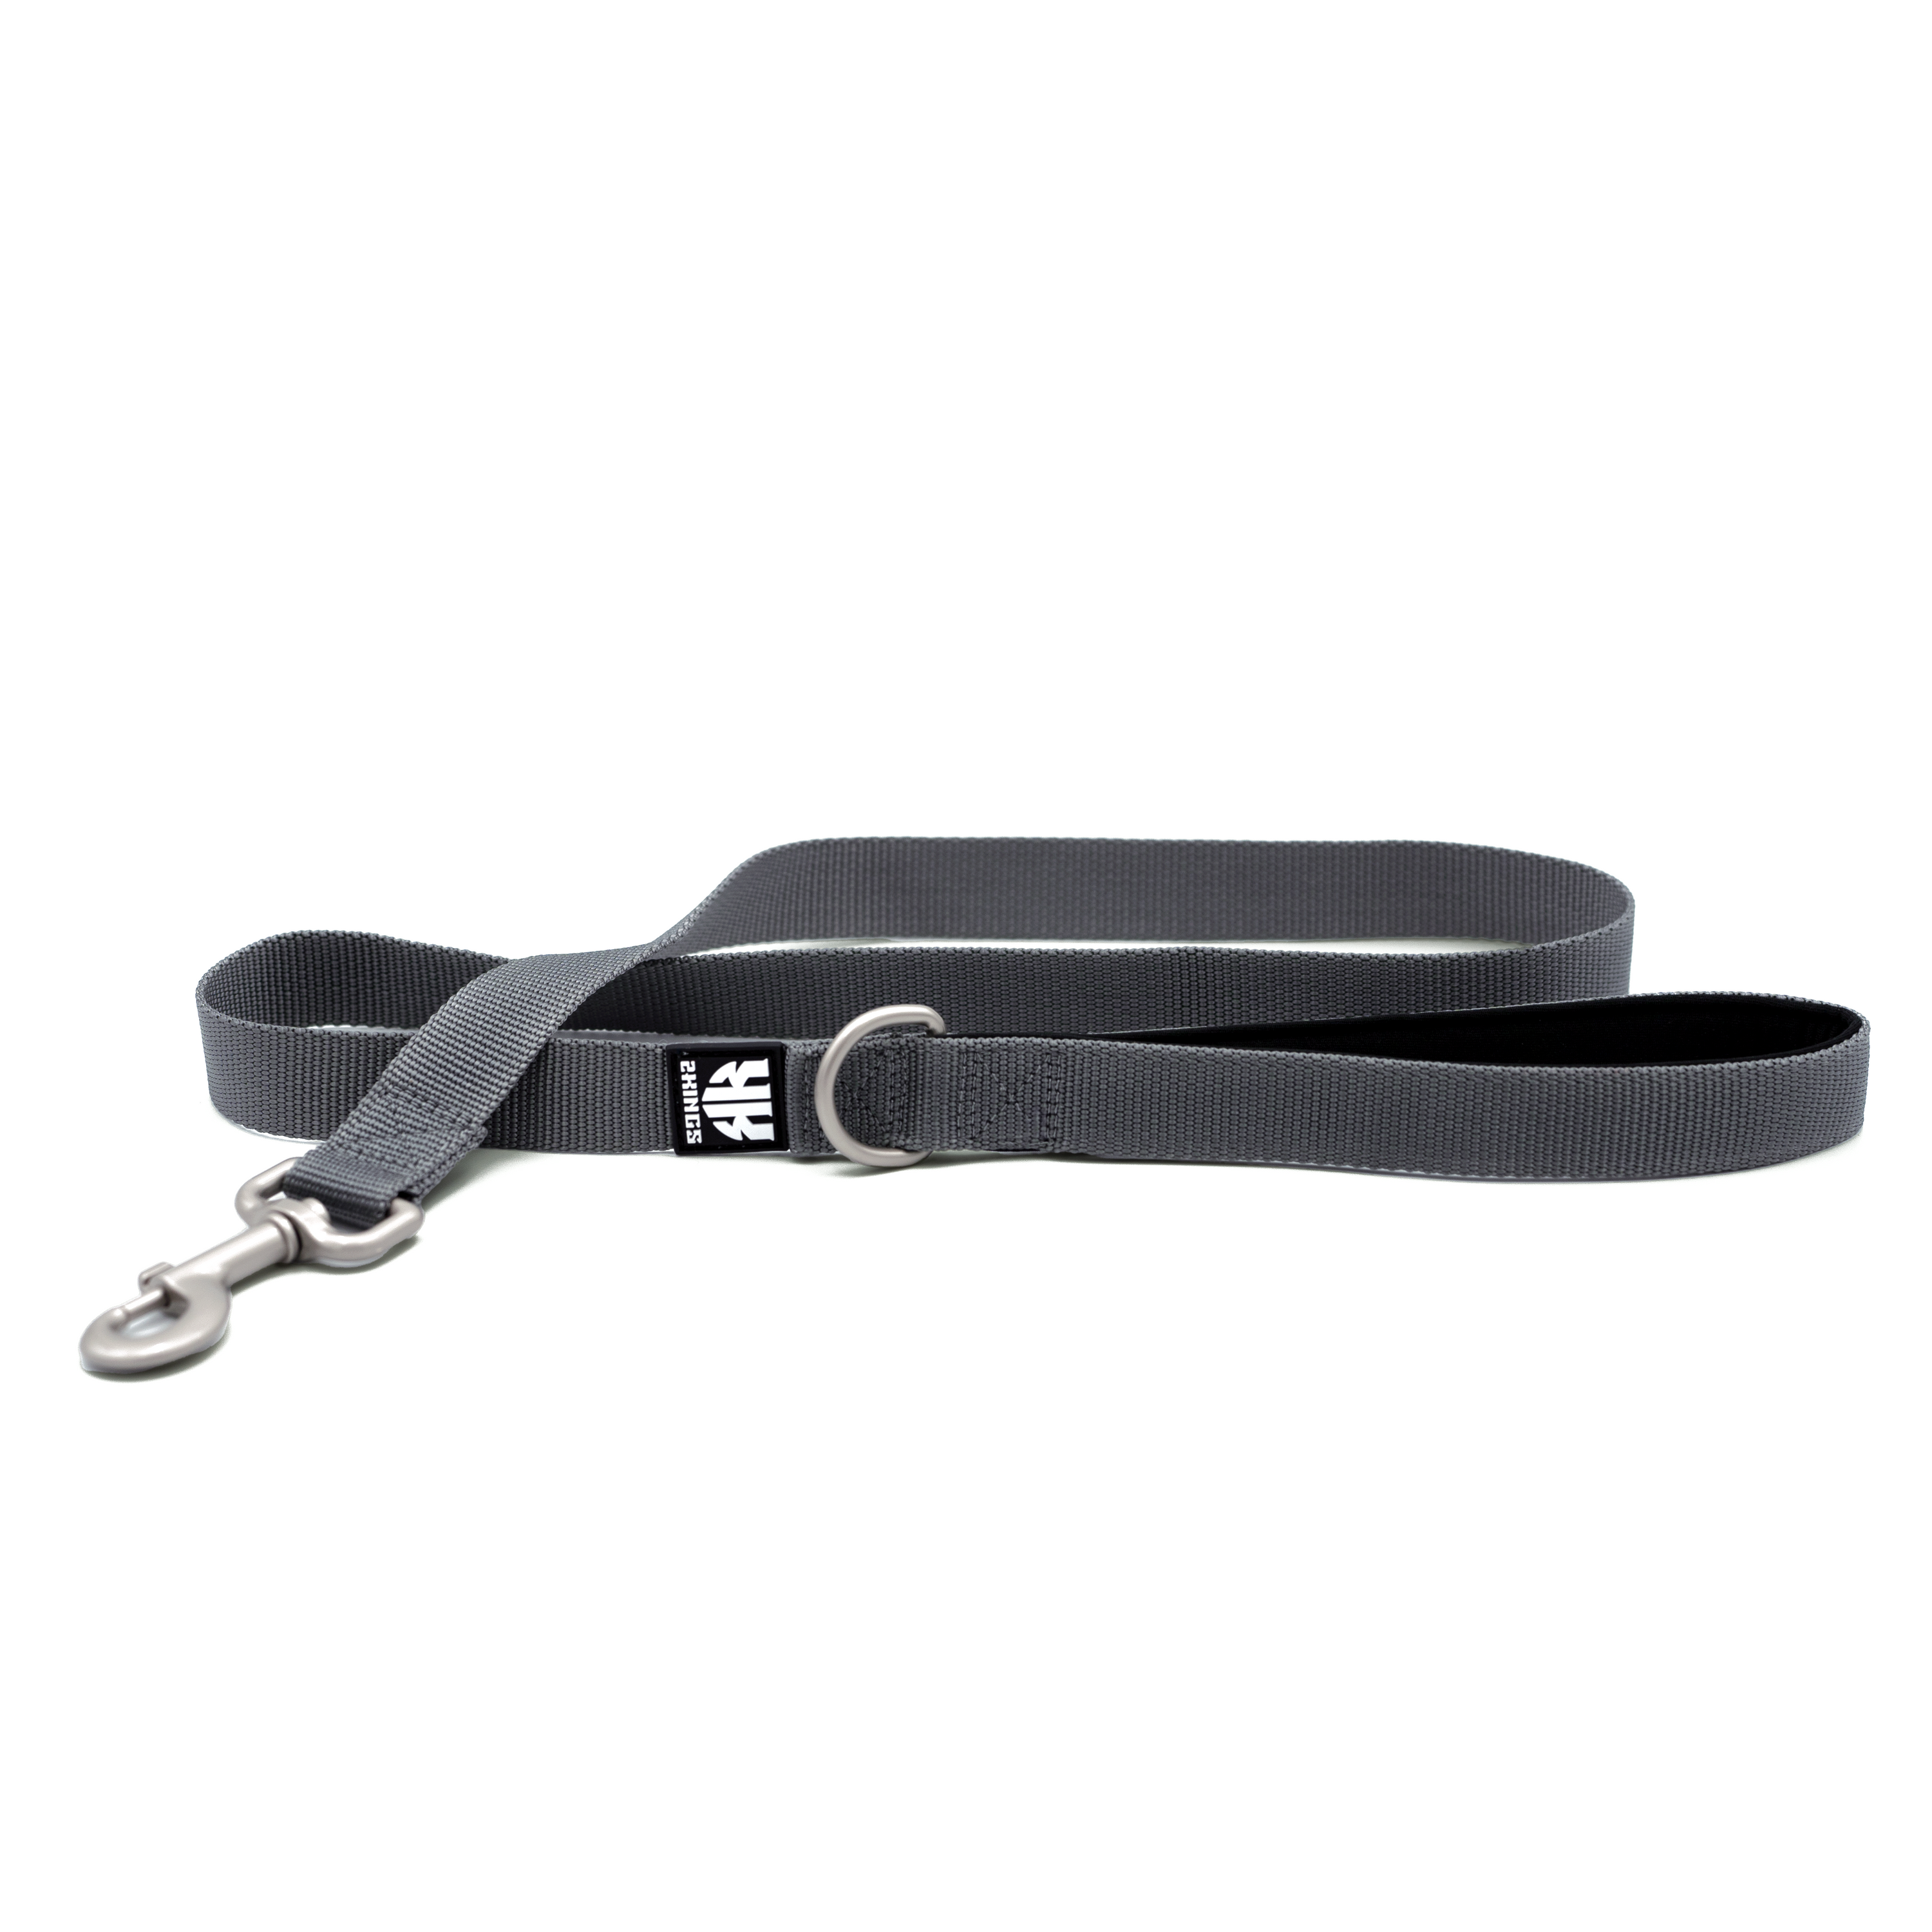 Adjustable Dog Harness & Classic Lead Set - Reflective & Lightweight - Grey.